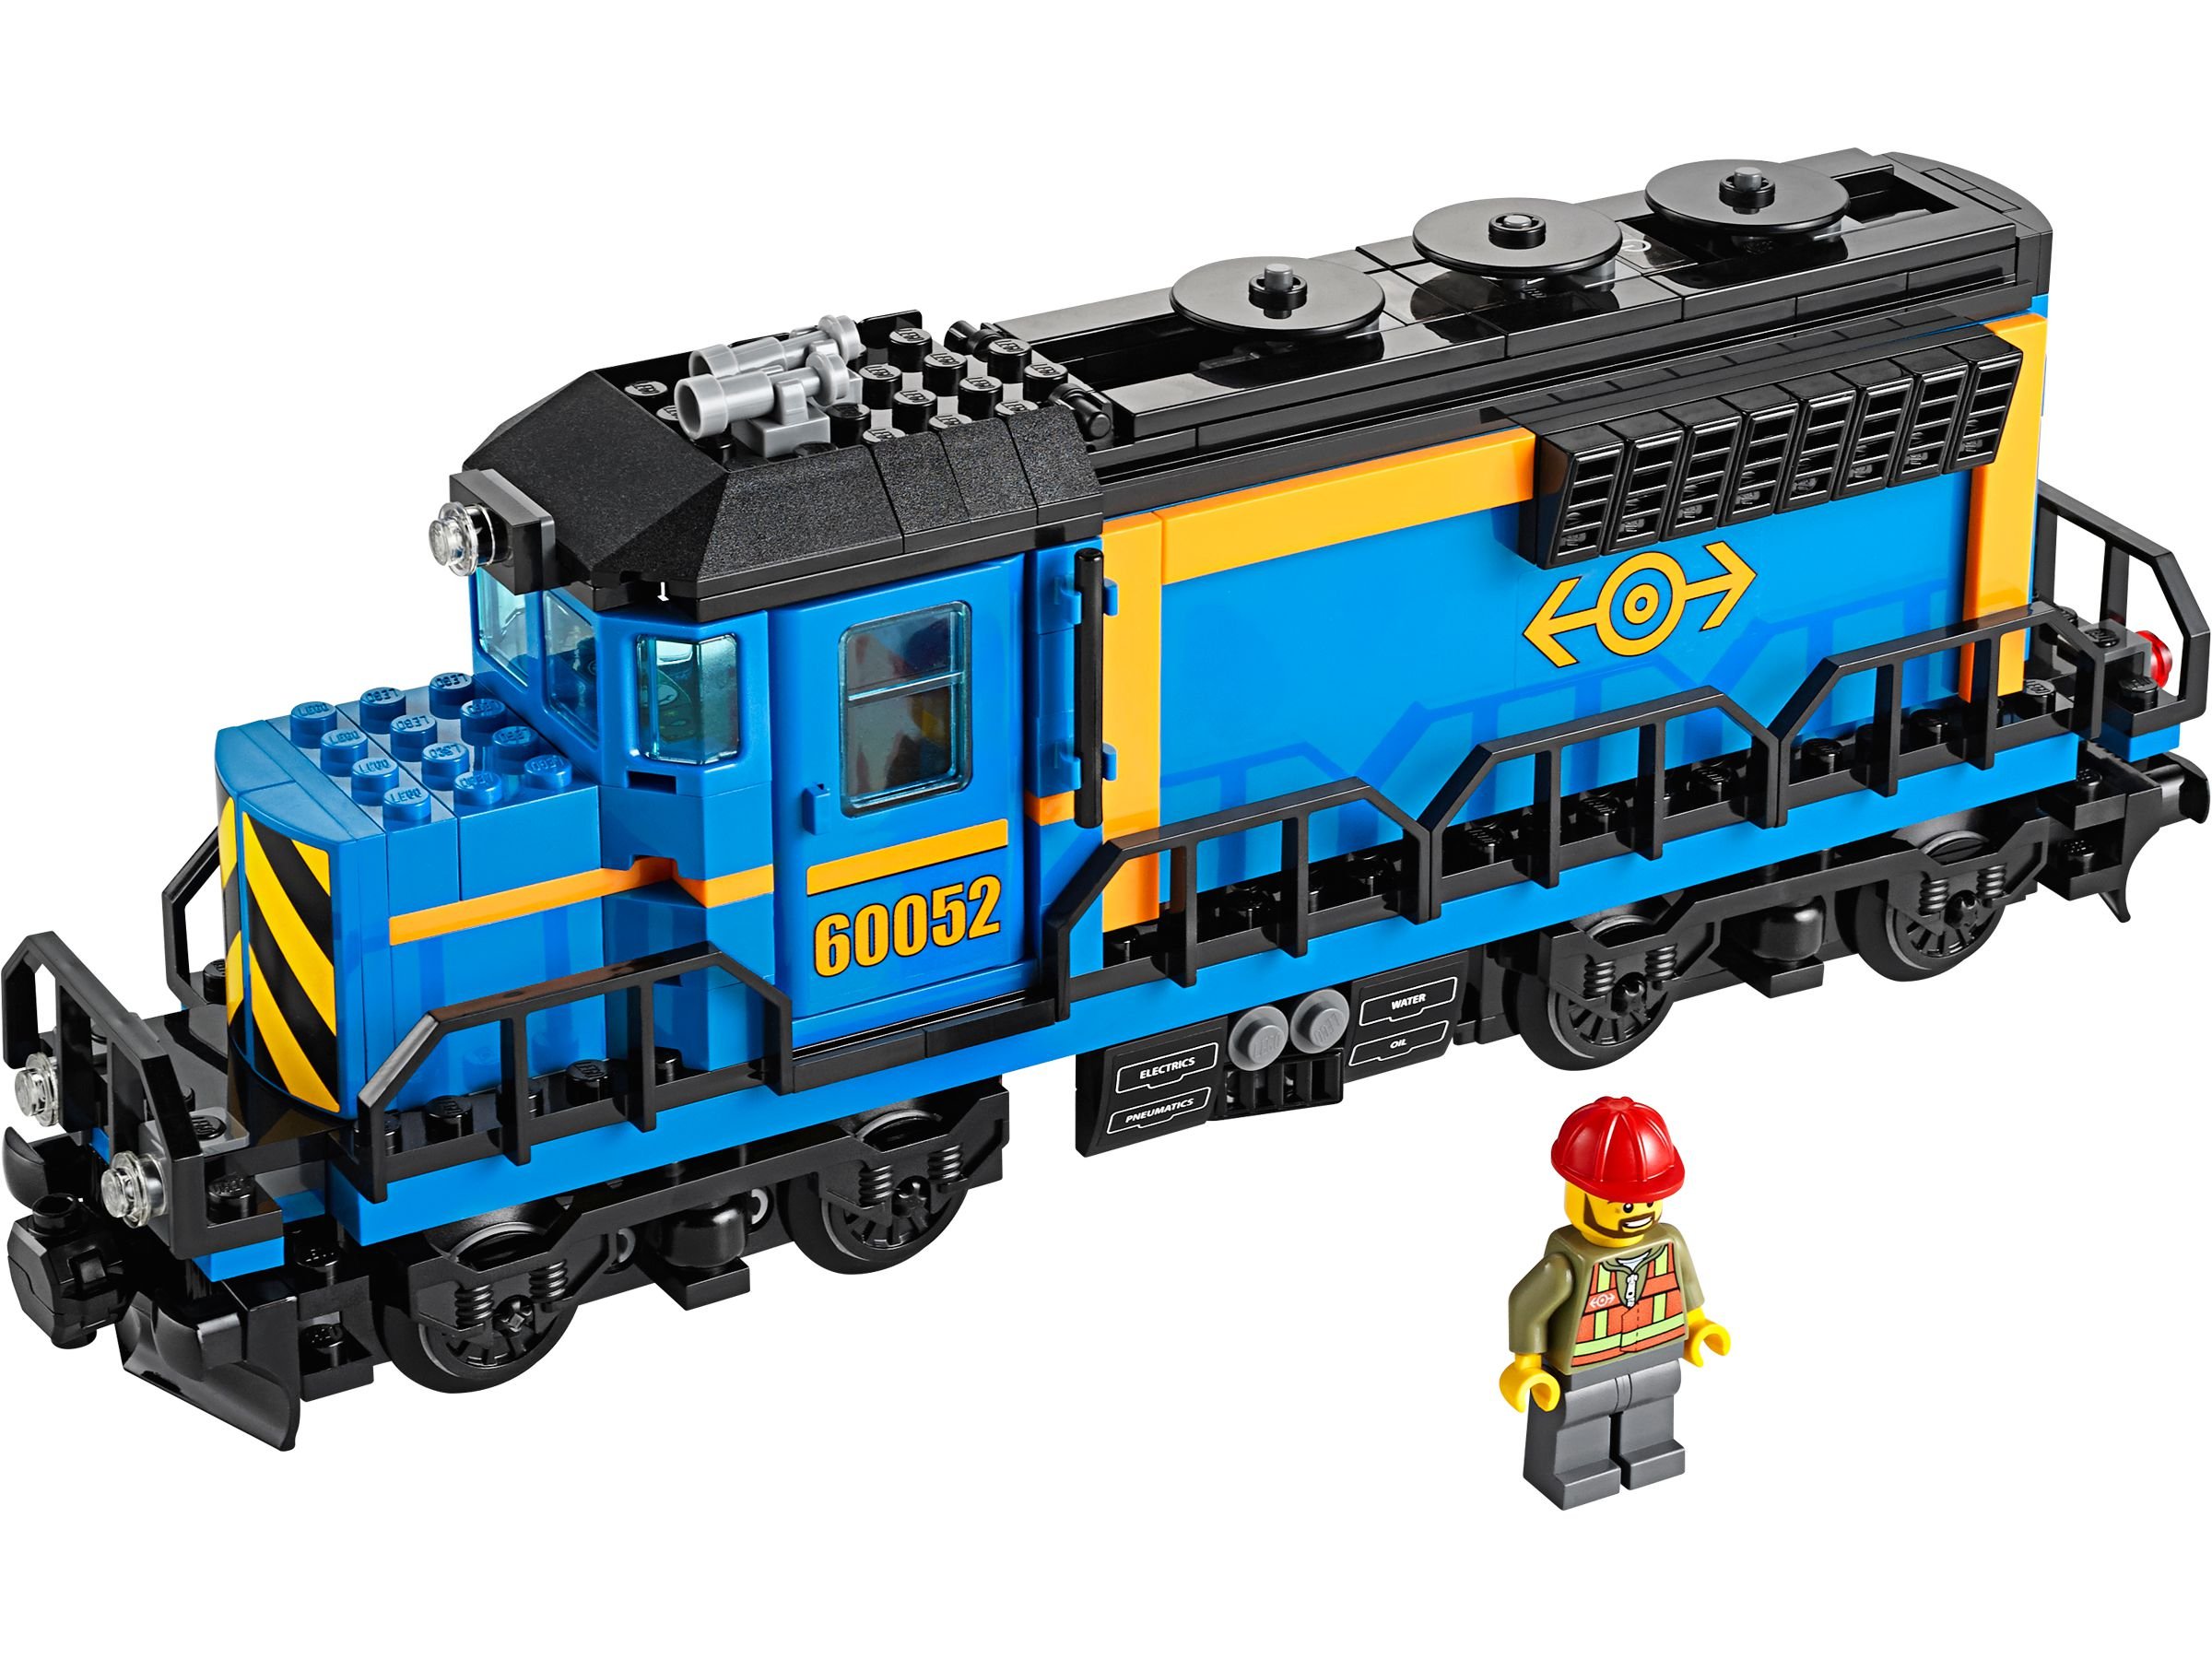 LEGO City 60052 Güterzug LEGO_60052_alt2.jpg